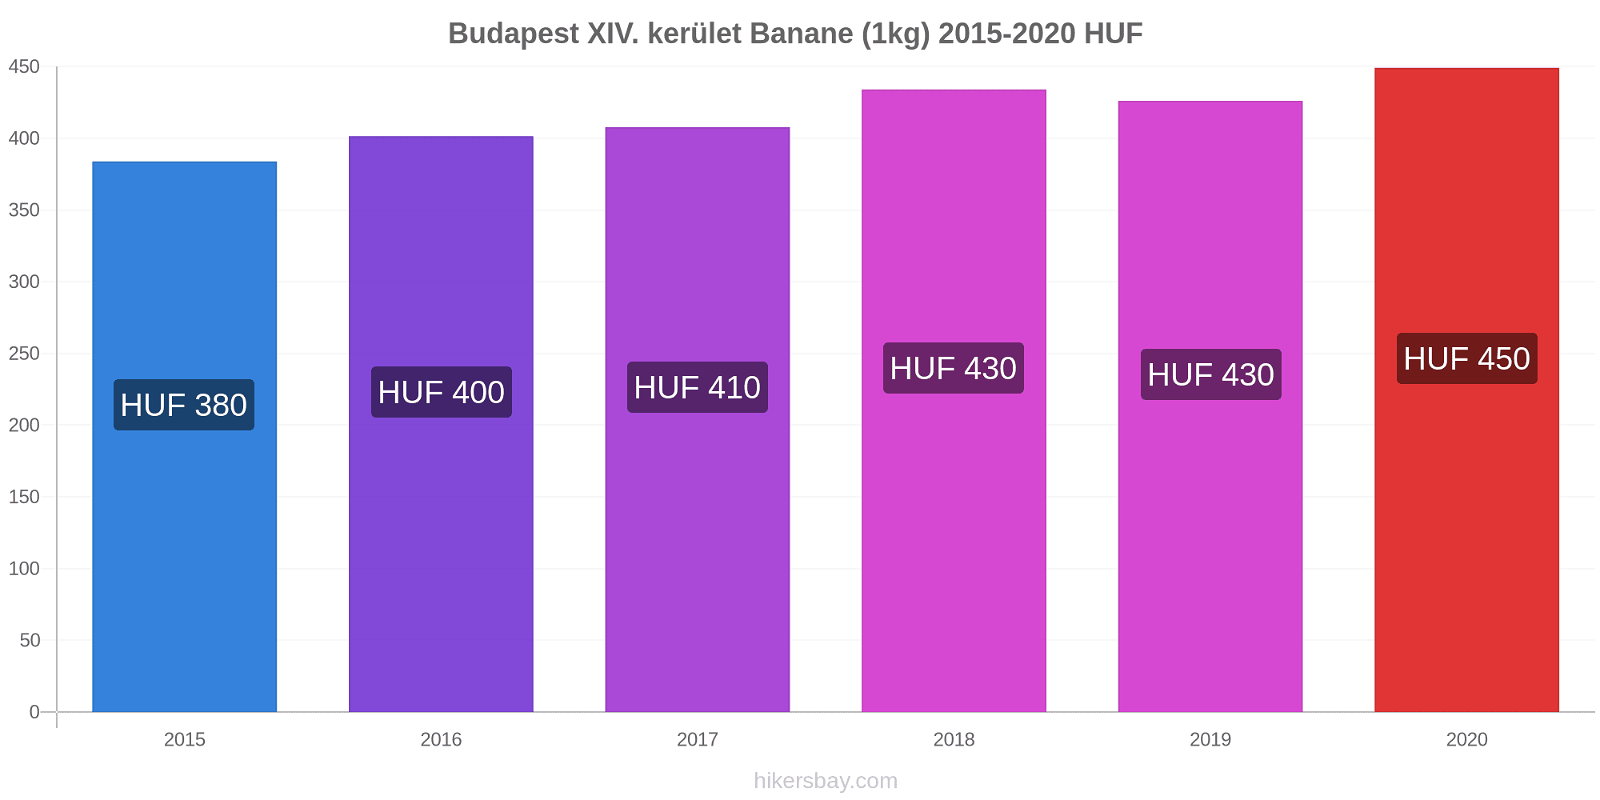 Budapest XIV. kerület variazioni di prezzo Banana (1kg) hikersbay.com